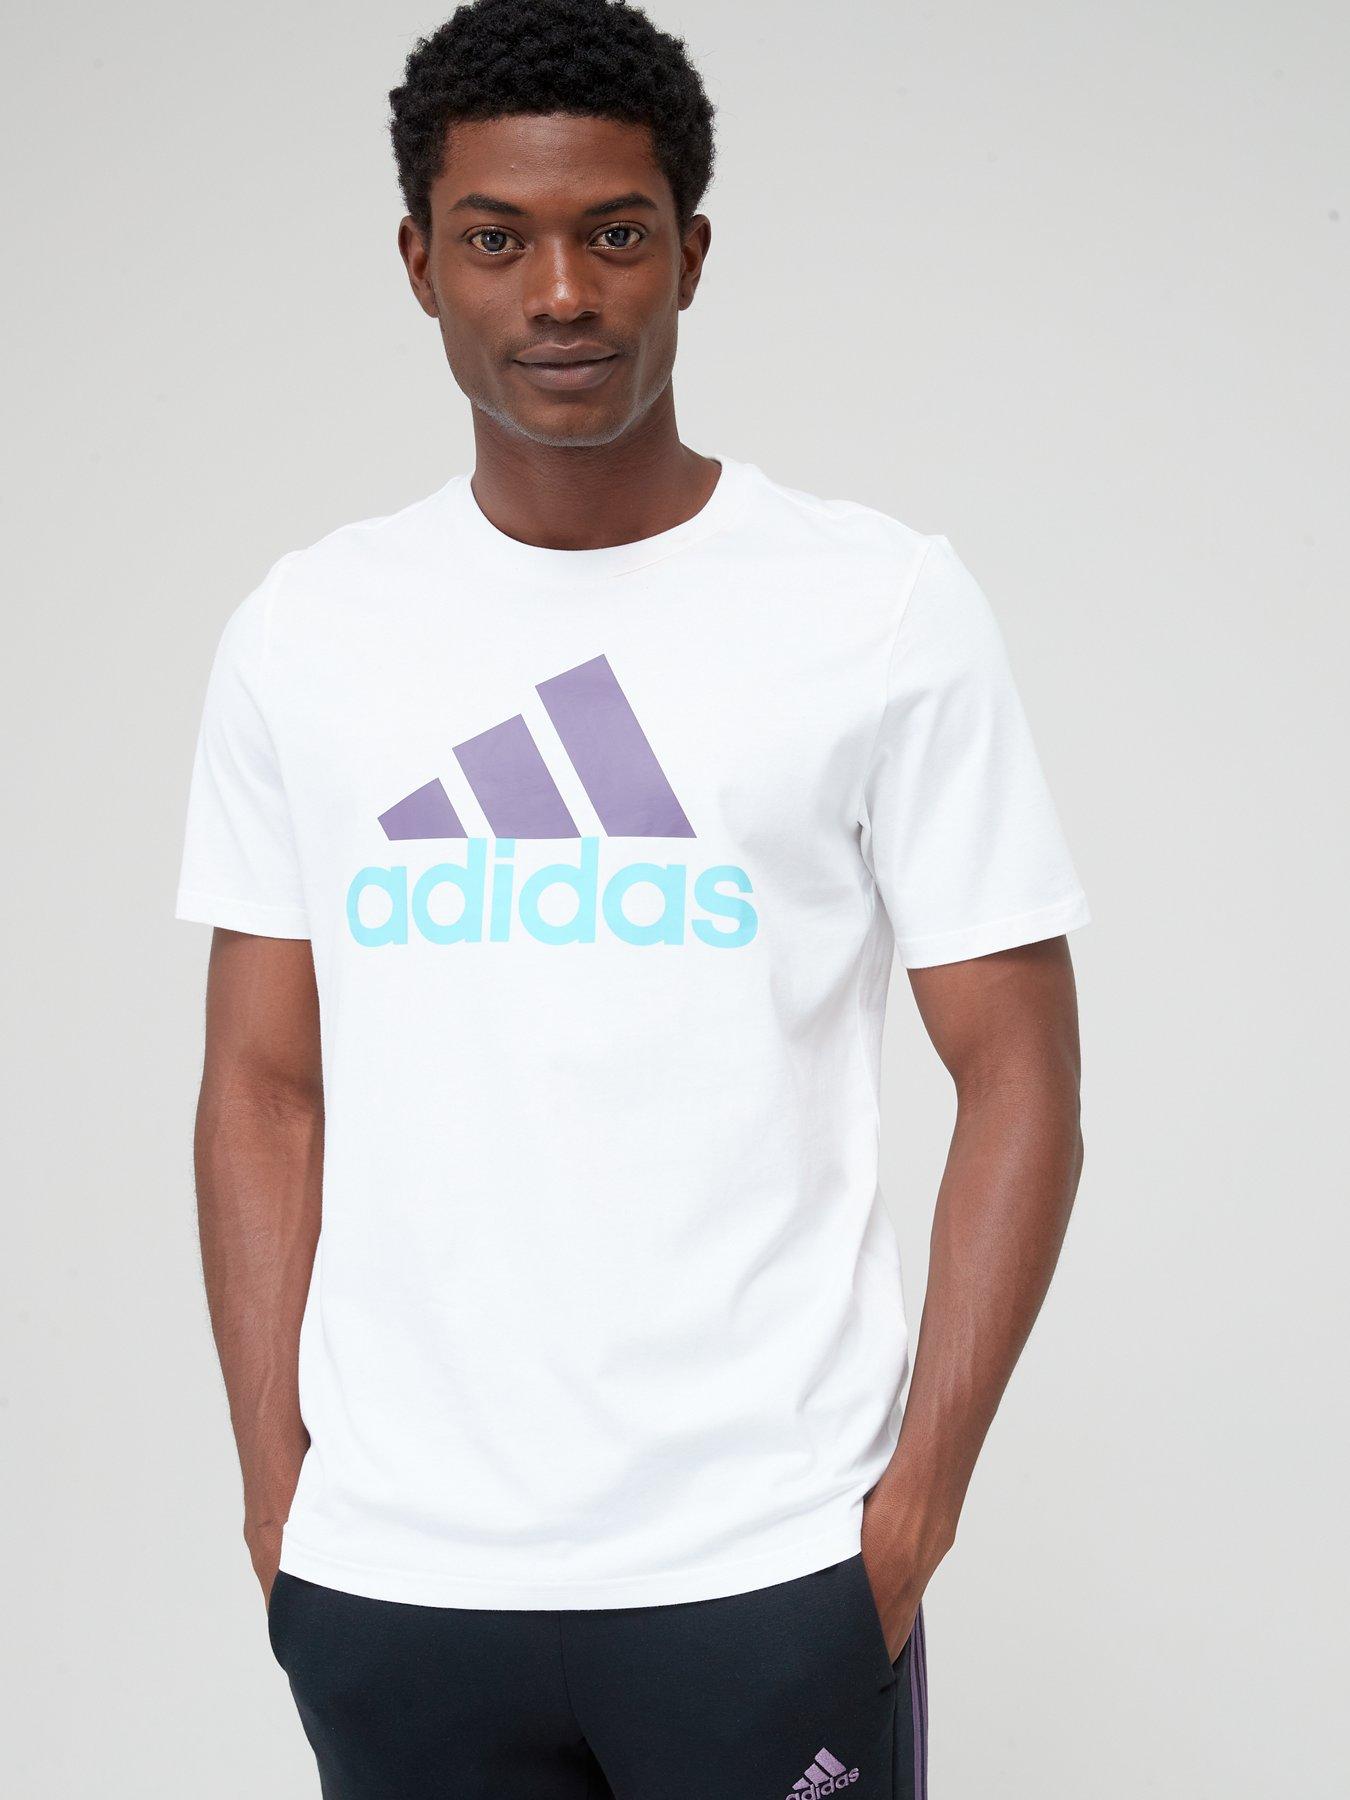 ADIDAS T Shirt TREFOIL Reflective Silver Logo WHITE Men’s LARGE Retro  Running